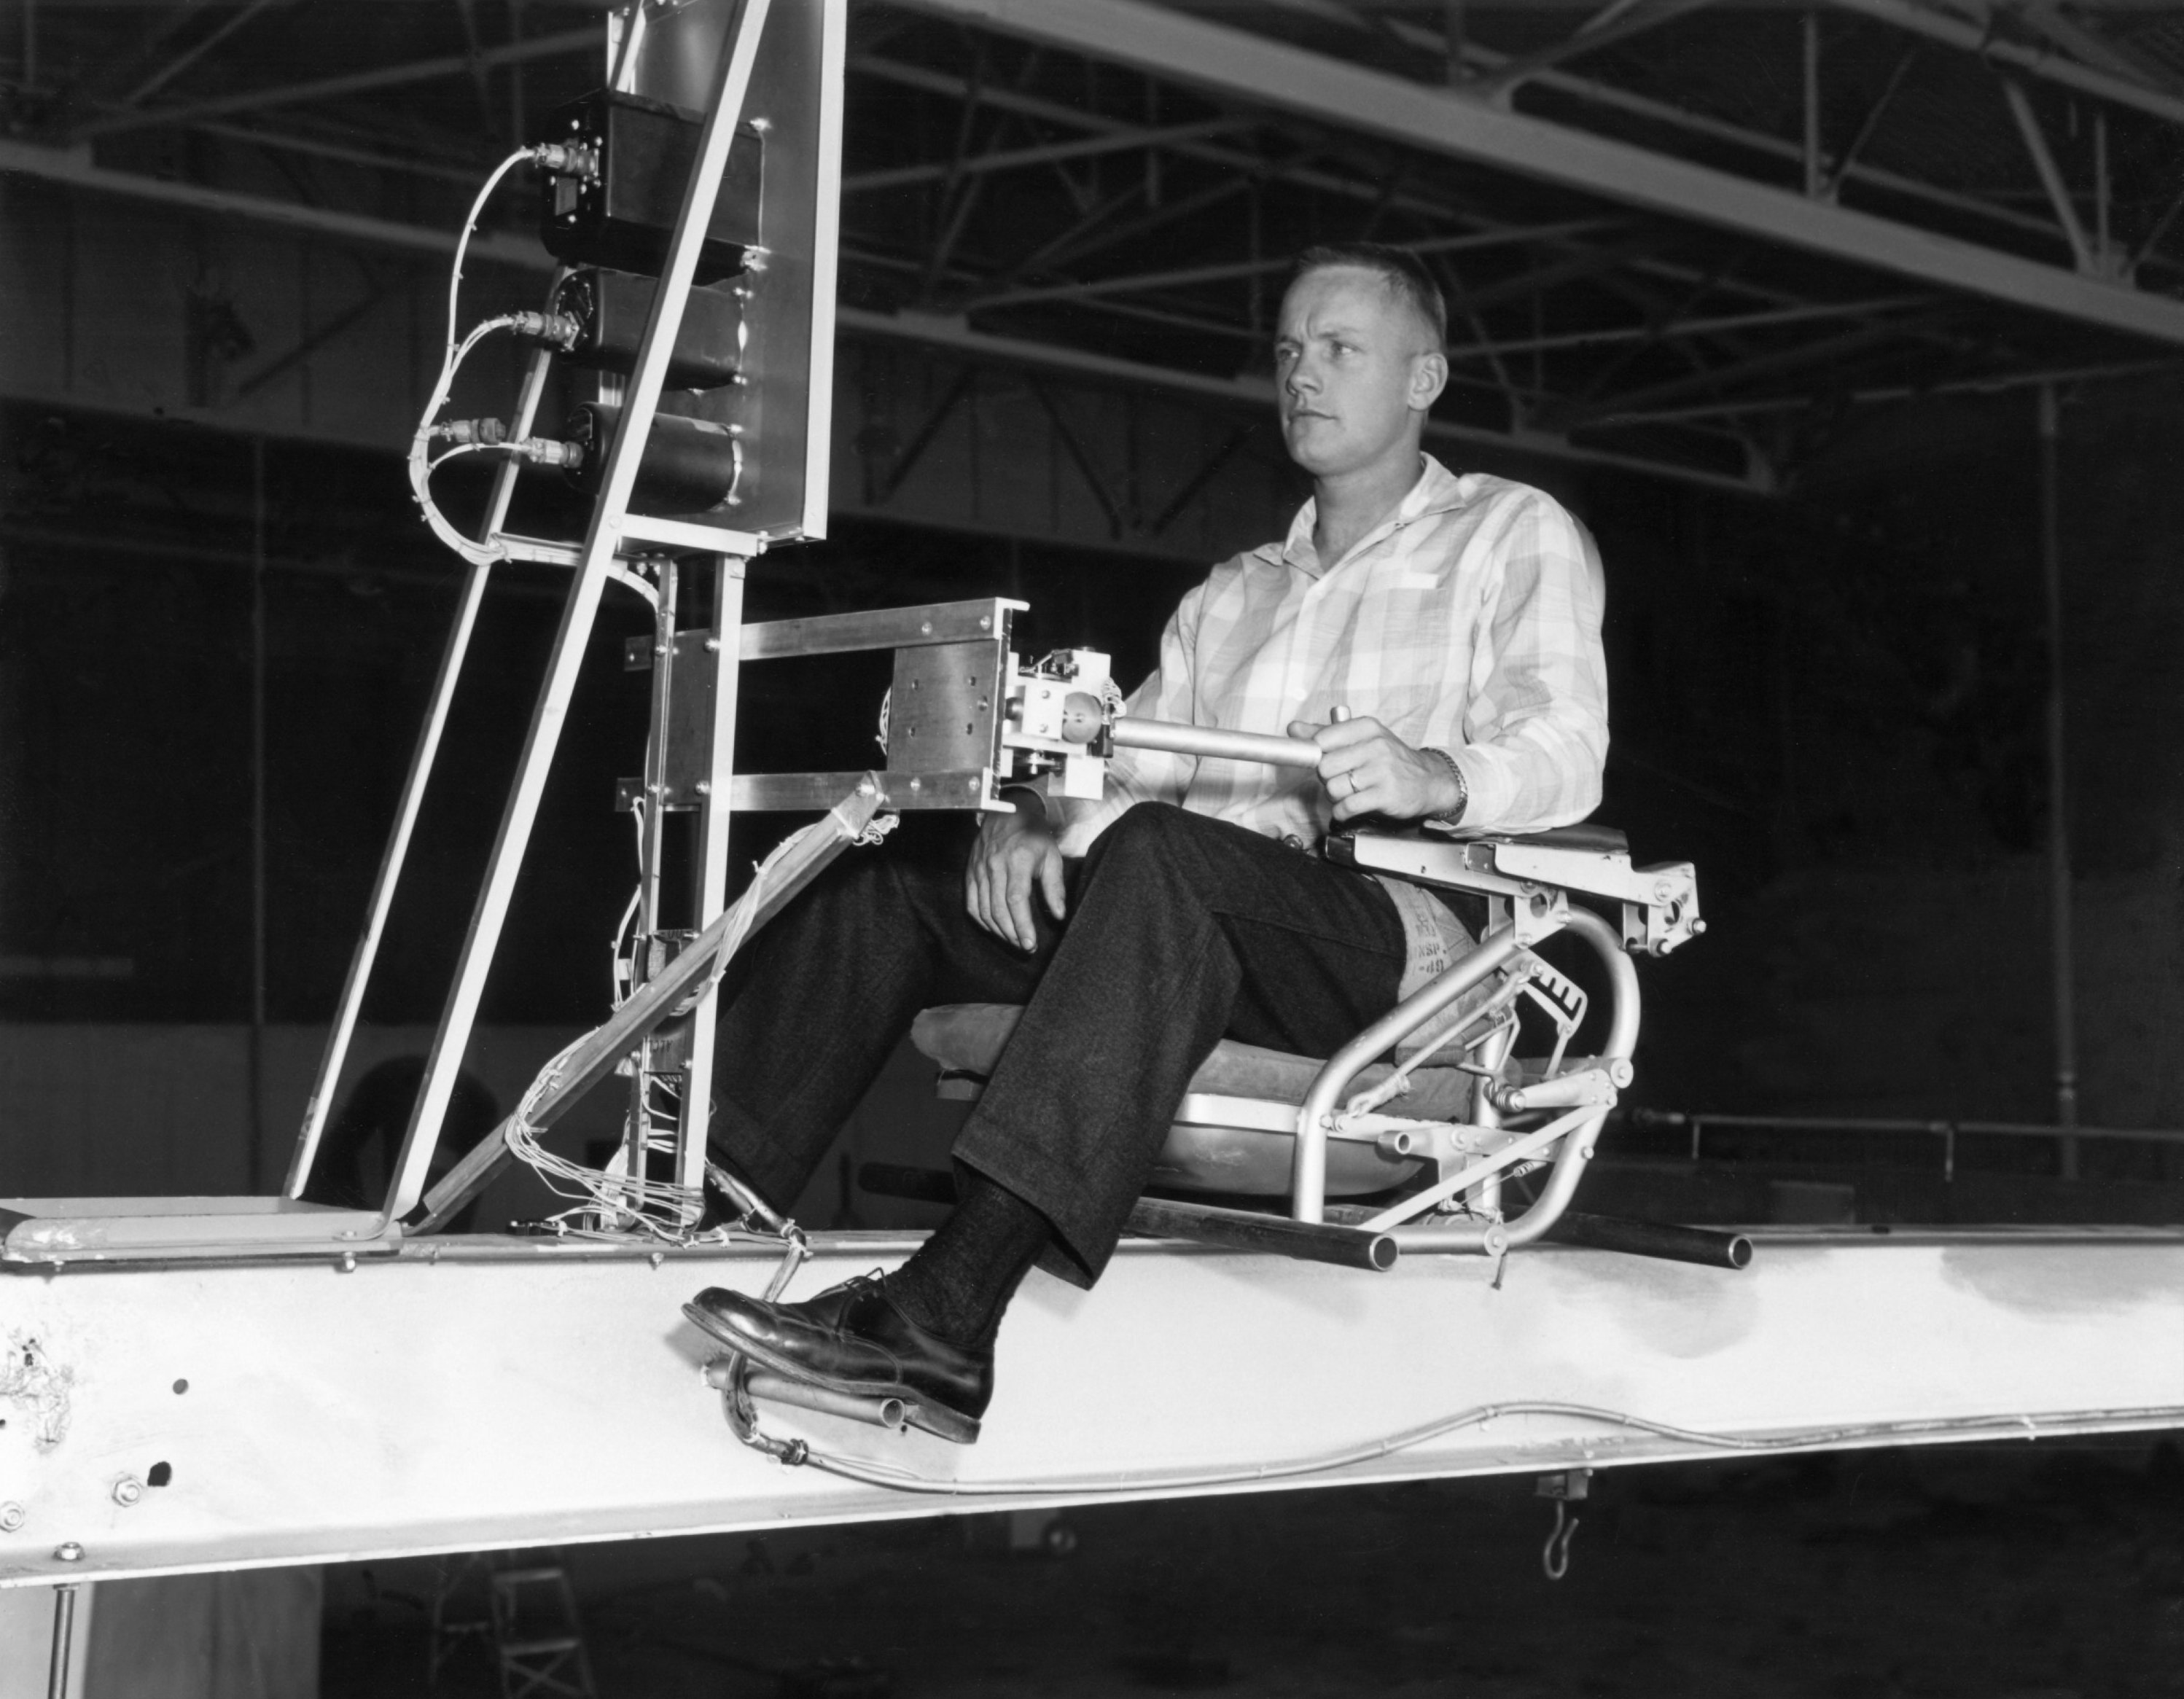 Closeup of research pilot Neil Armstrong operating the Iron Cross Attitude Simulator reaction contro